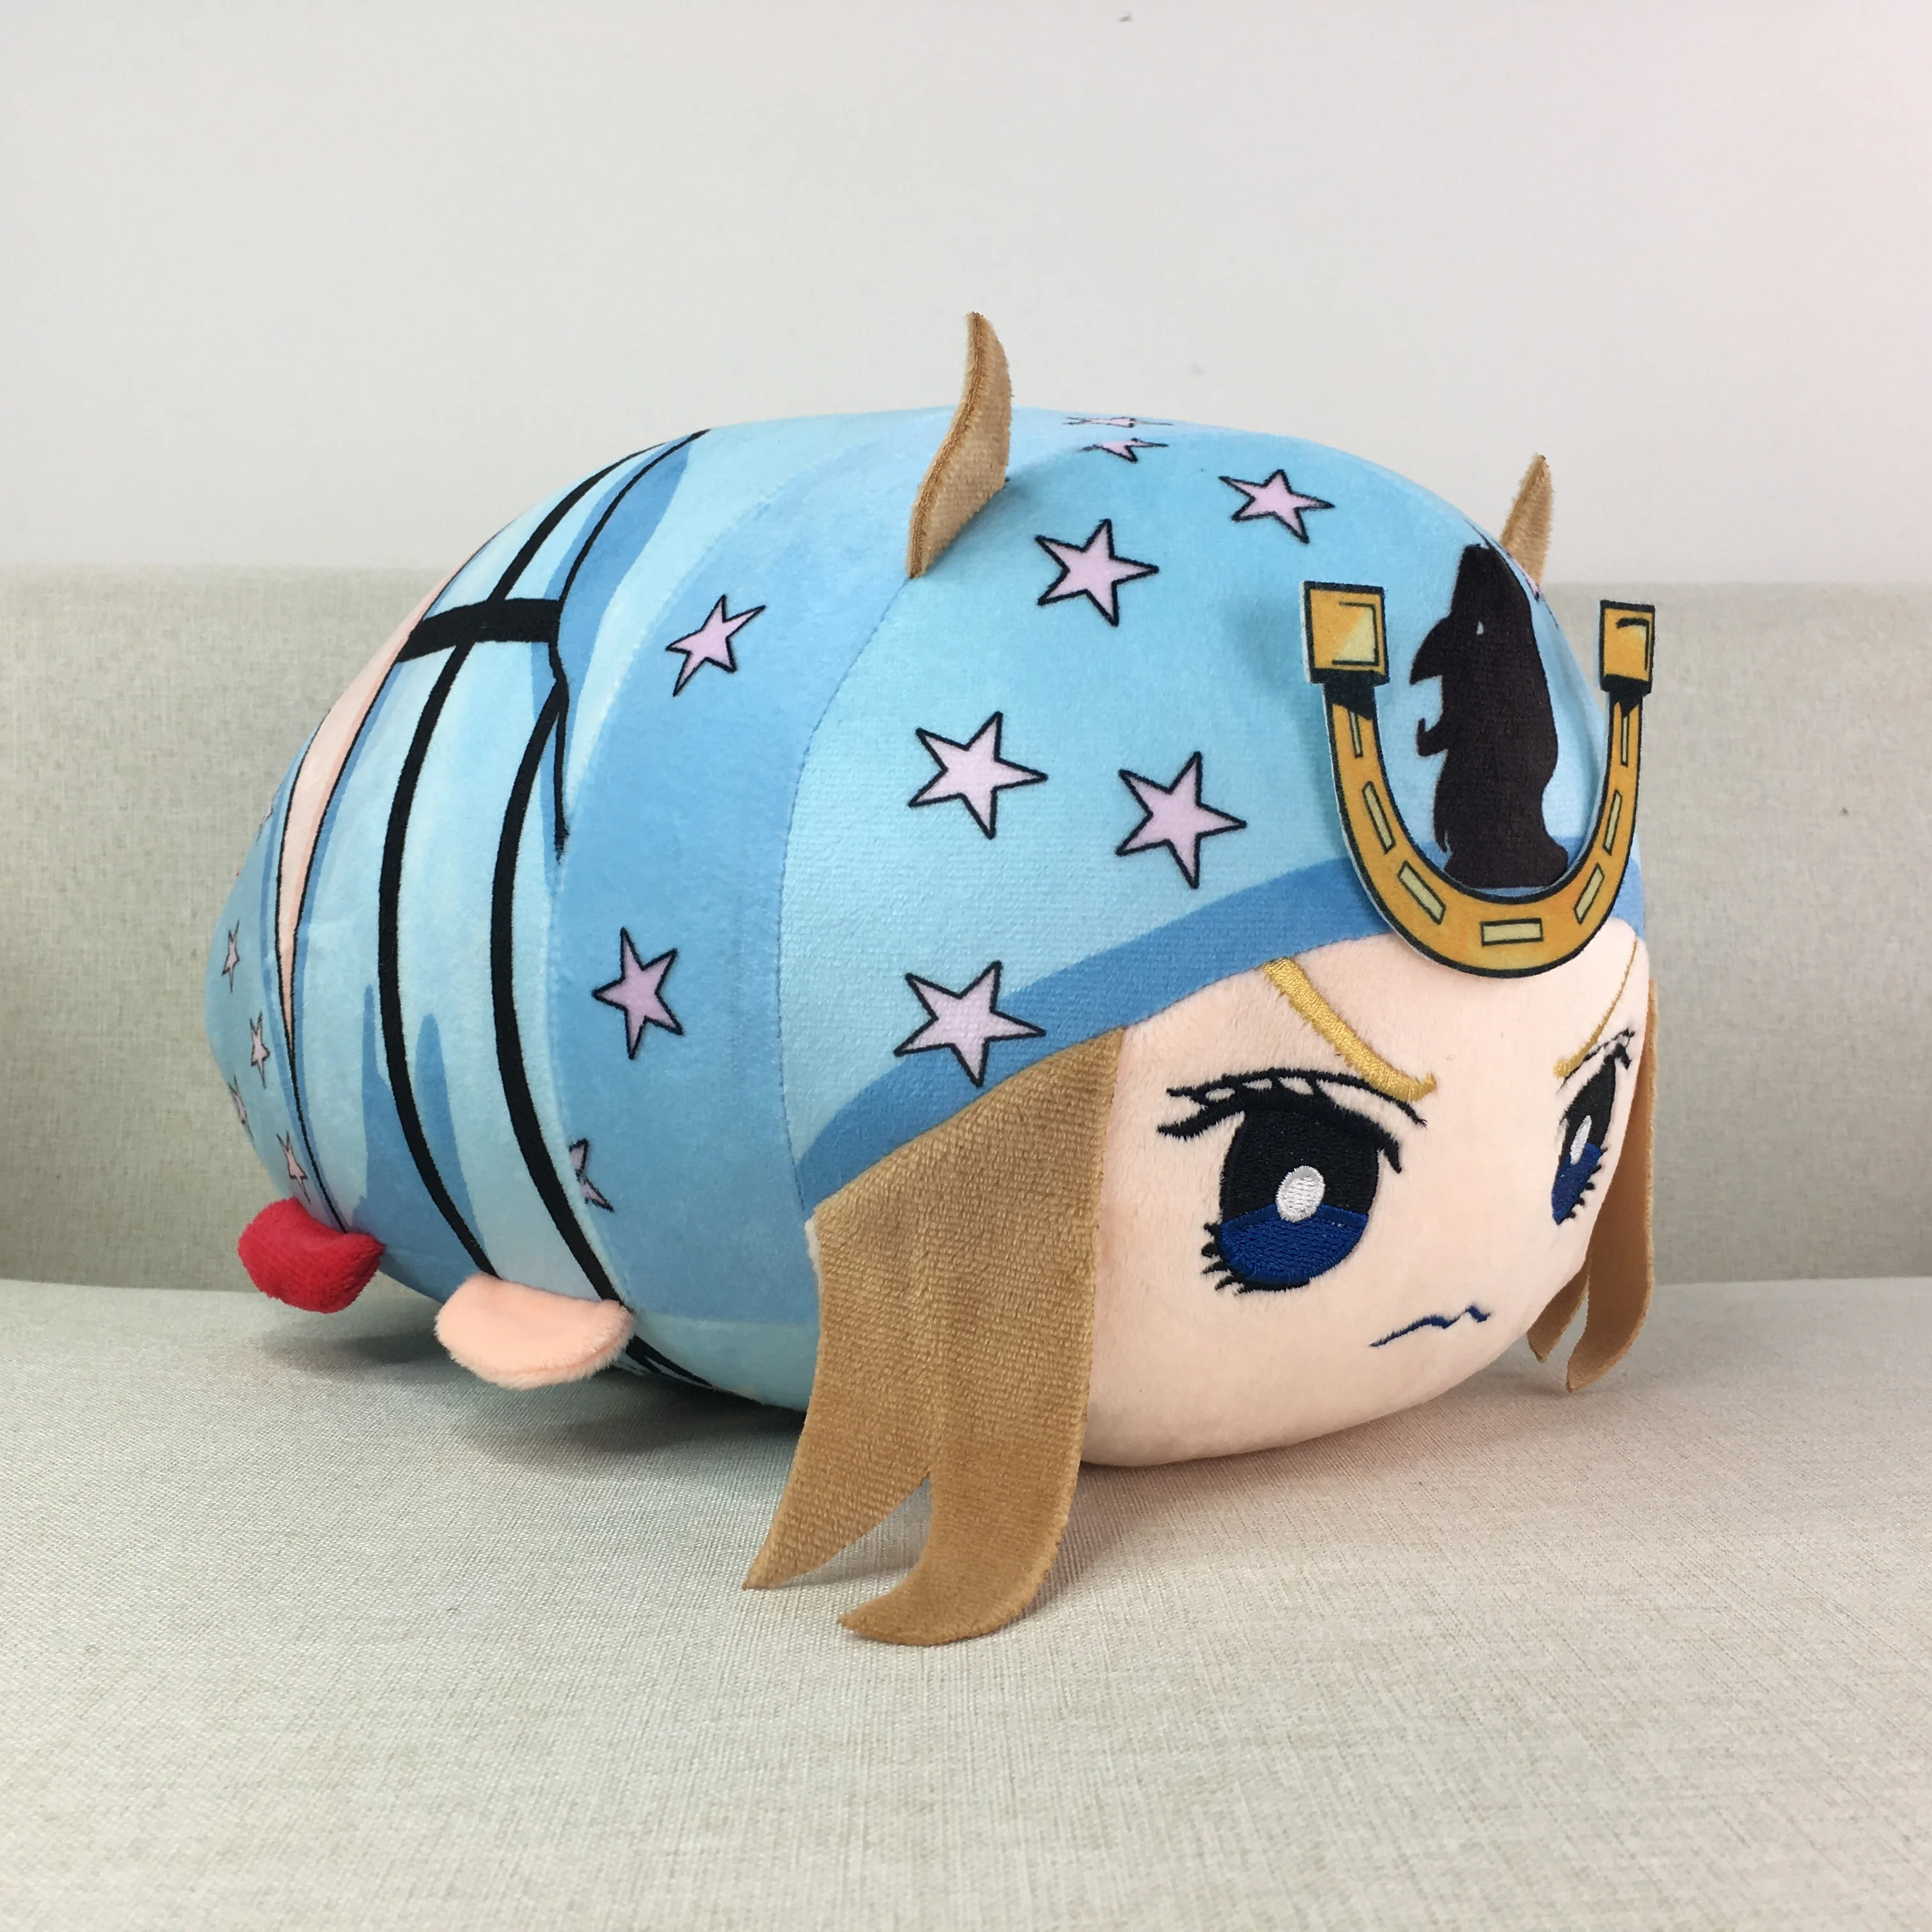 Anime JoJos Bizarre Adventure Johnny Joestar 30cm Toys Doll Stuffed Toy Soft Pillow Cushion Plush Children Gift 8899 johnny